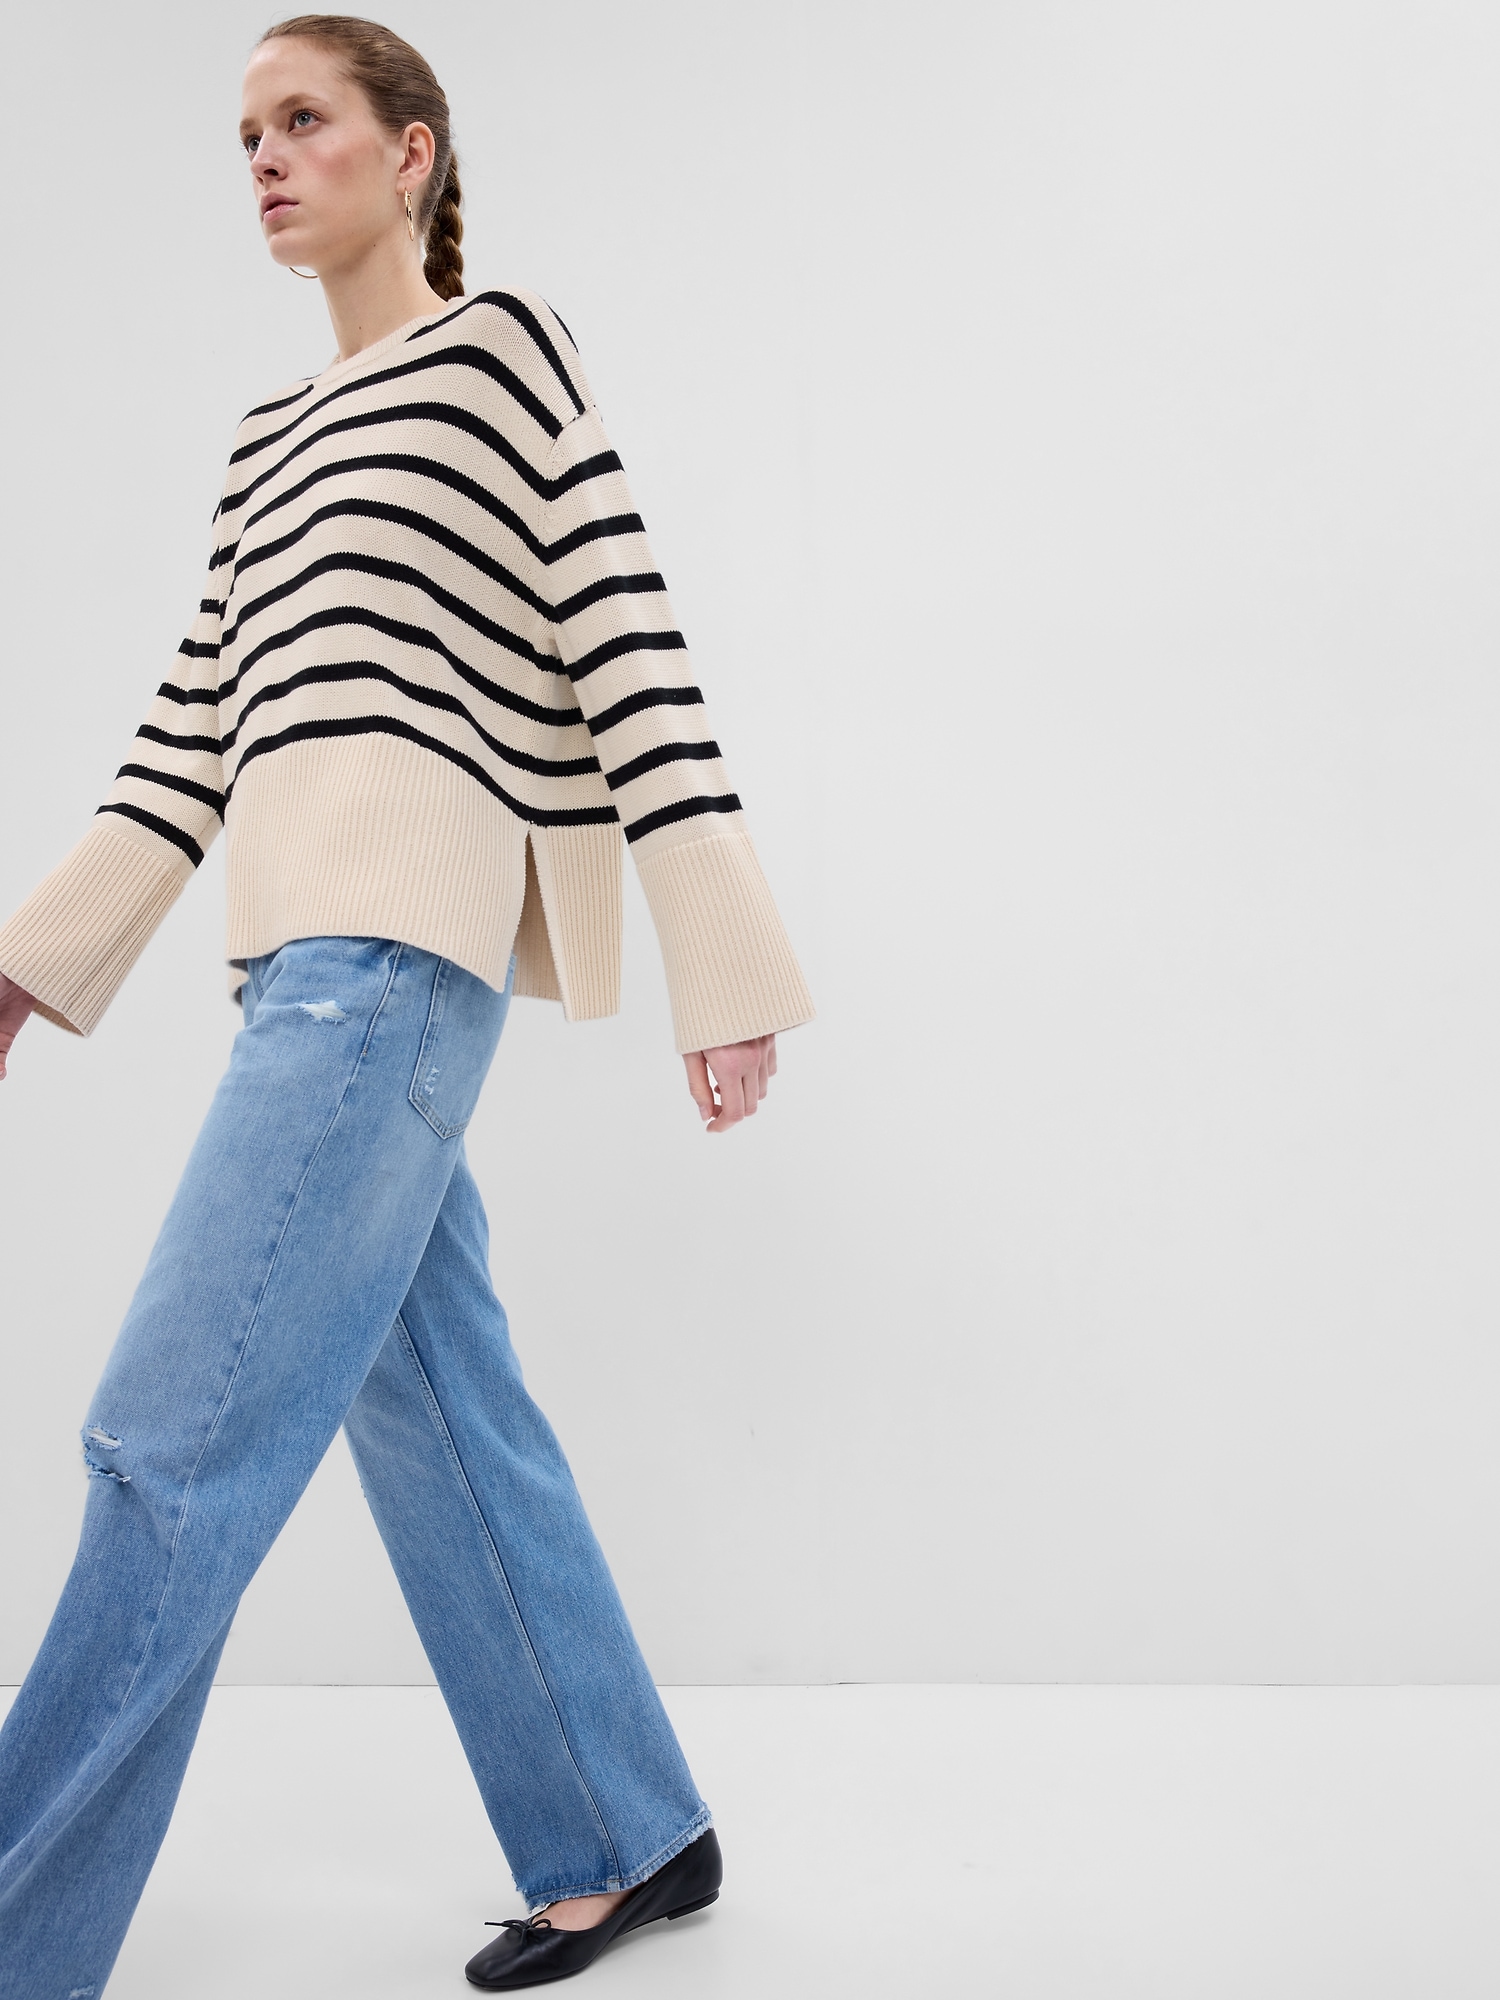 Gap is Having a Huge Fall Sale on Sweaters, Dresses & Jeans